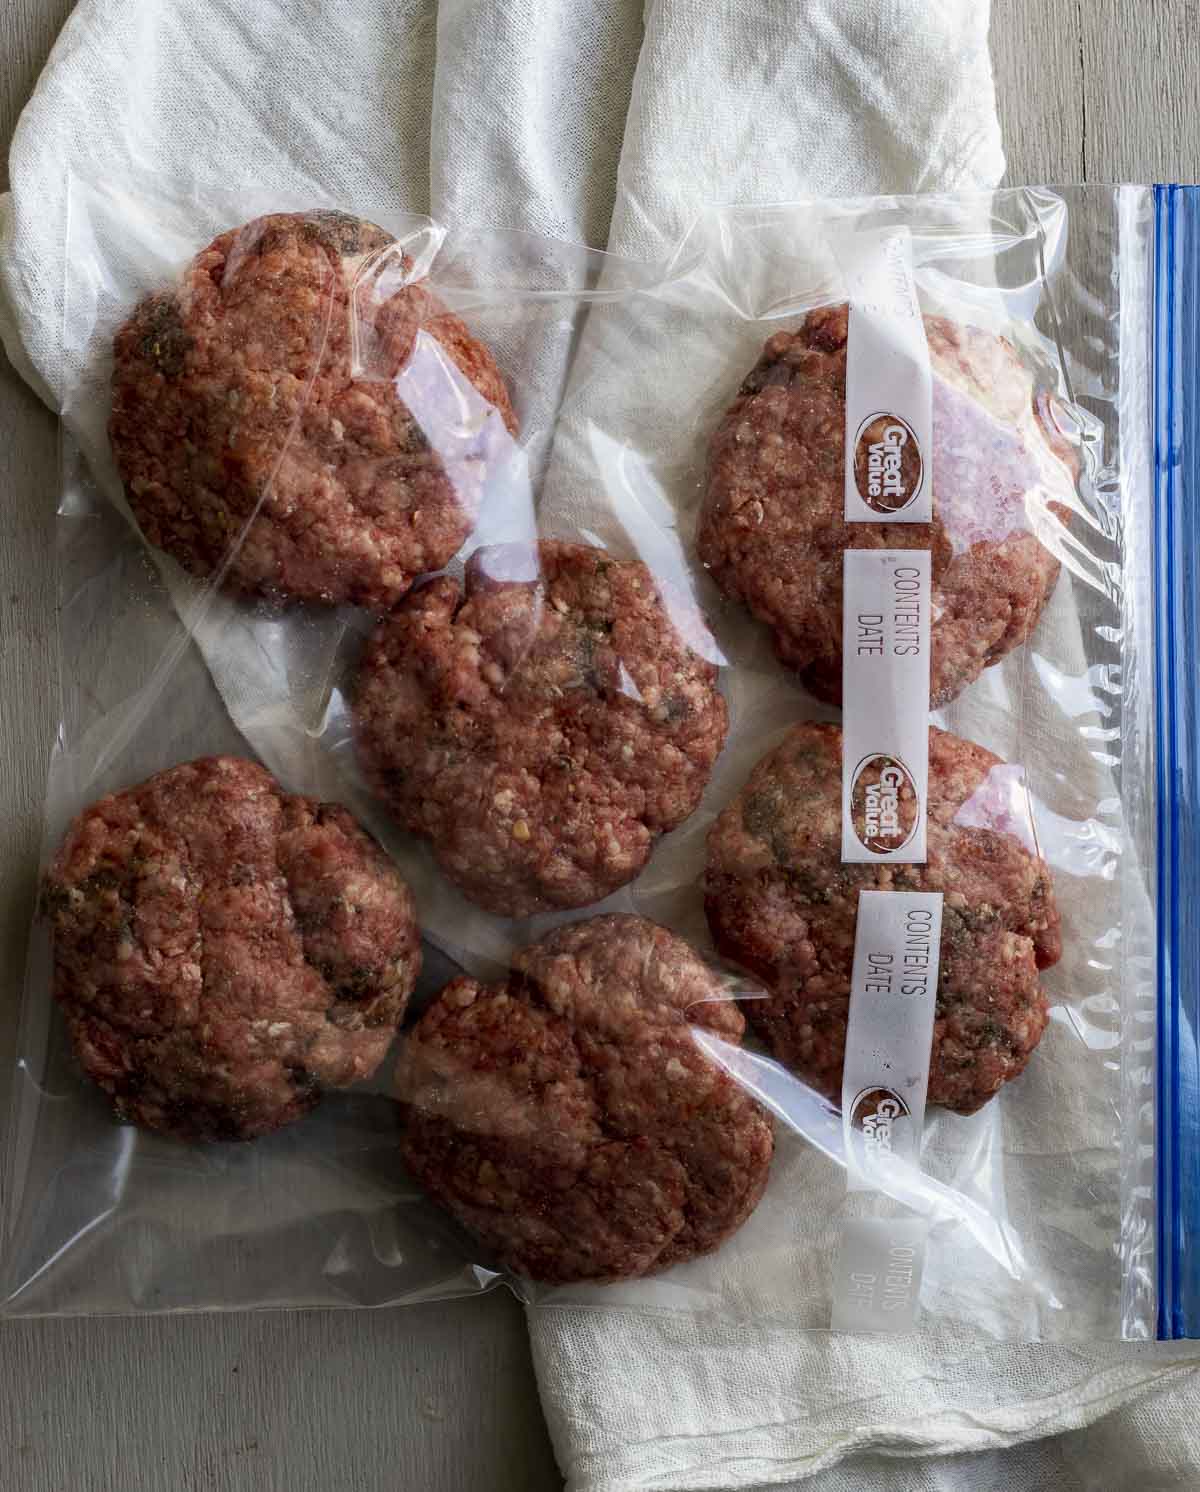 Raw burger patties in a large zip lock bag.